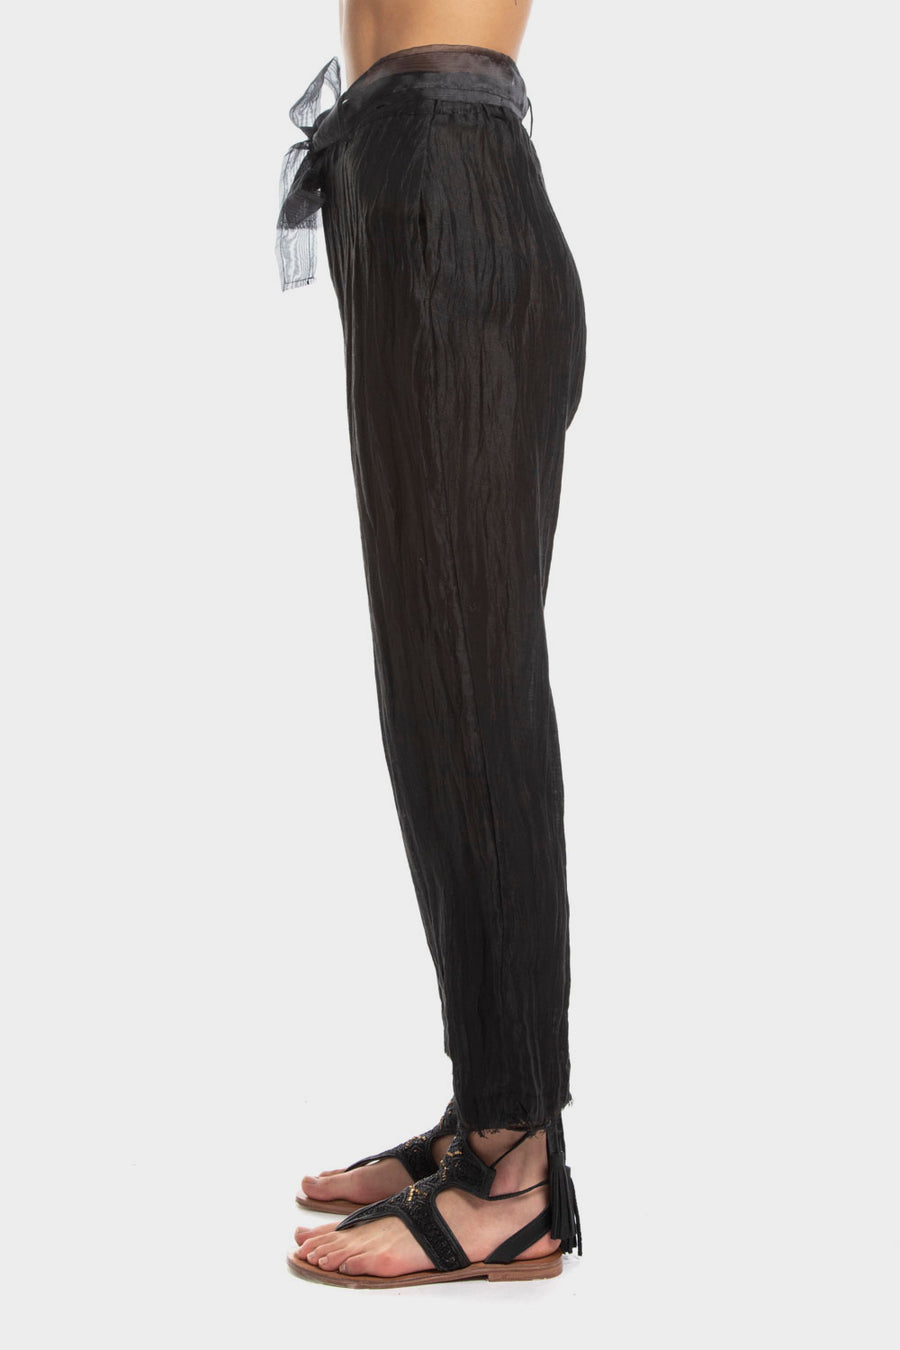 Pantalone Sanctamuerte con cinta in vita nero sm290